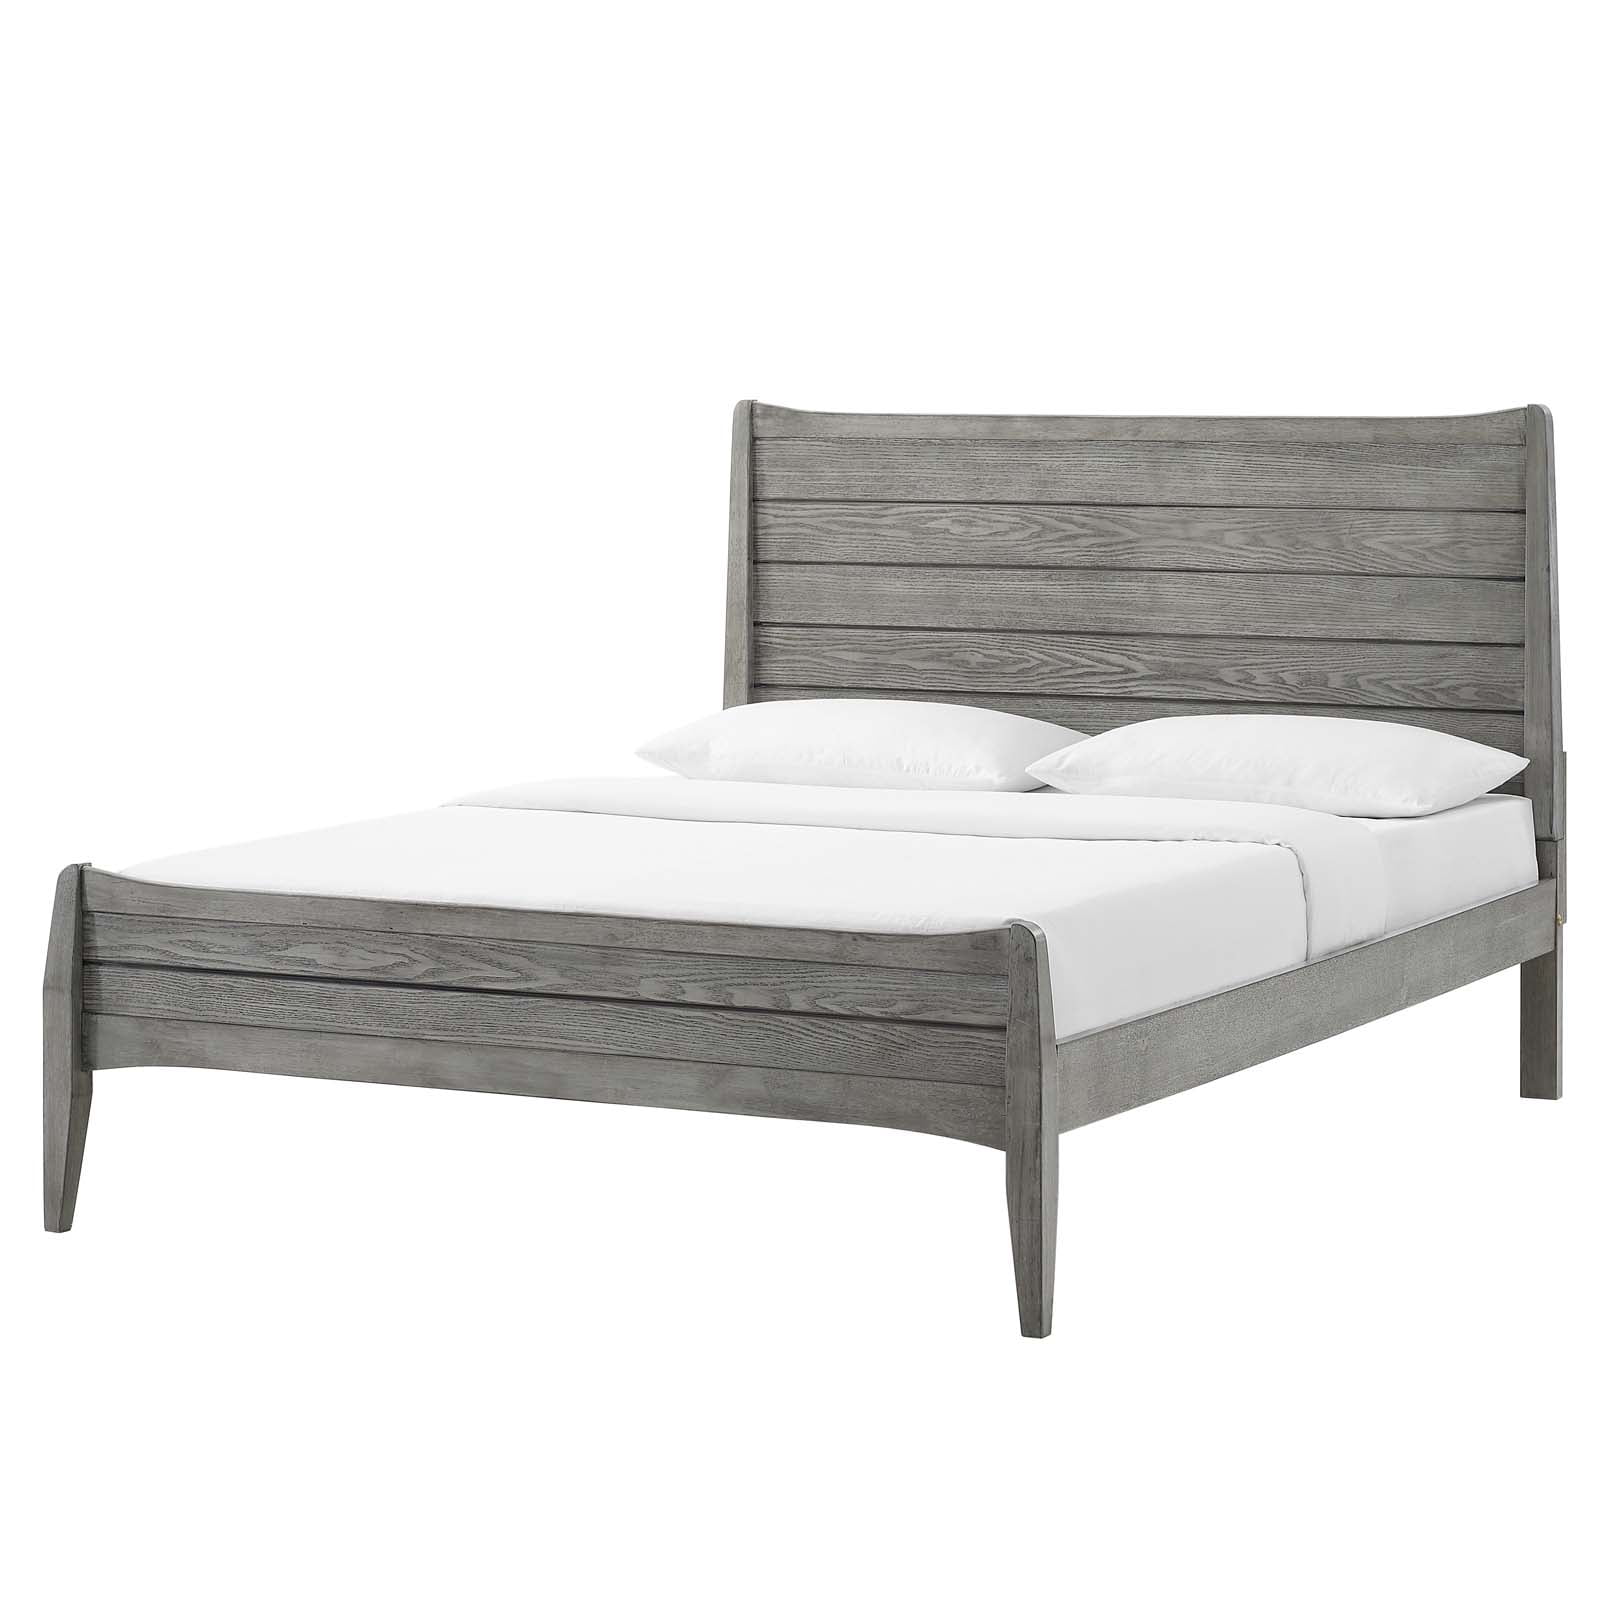 Platform Bed Frame, Twin Size, Wood, Grey Gray, Modern ...